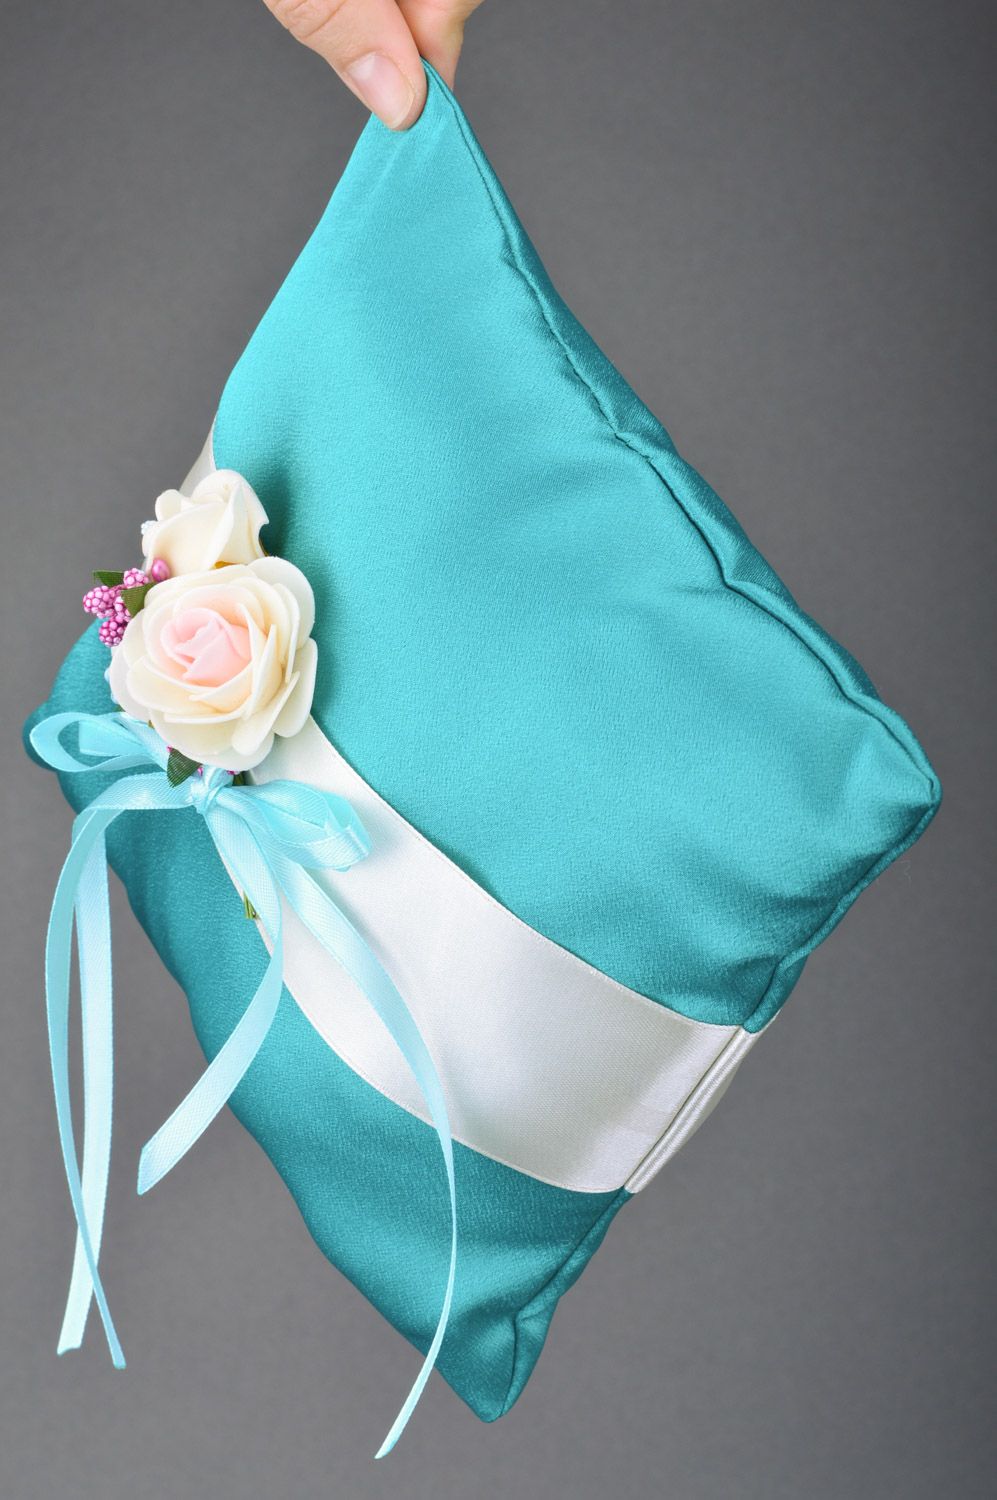 Handmade wedding rings bearer pillow sewn of blue satin with tender flowers  photo 3